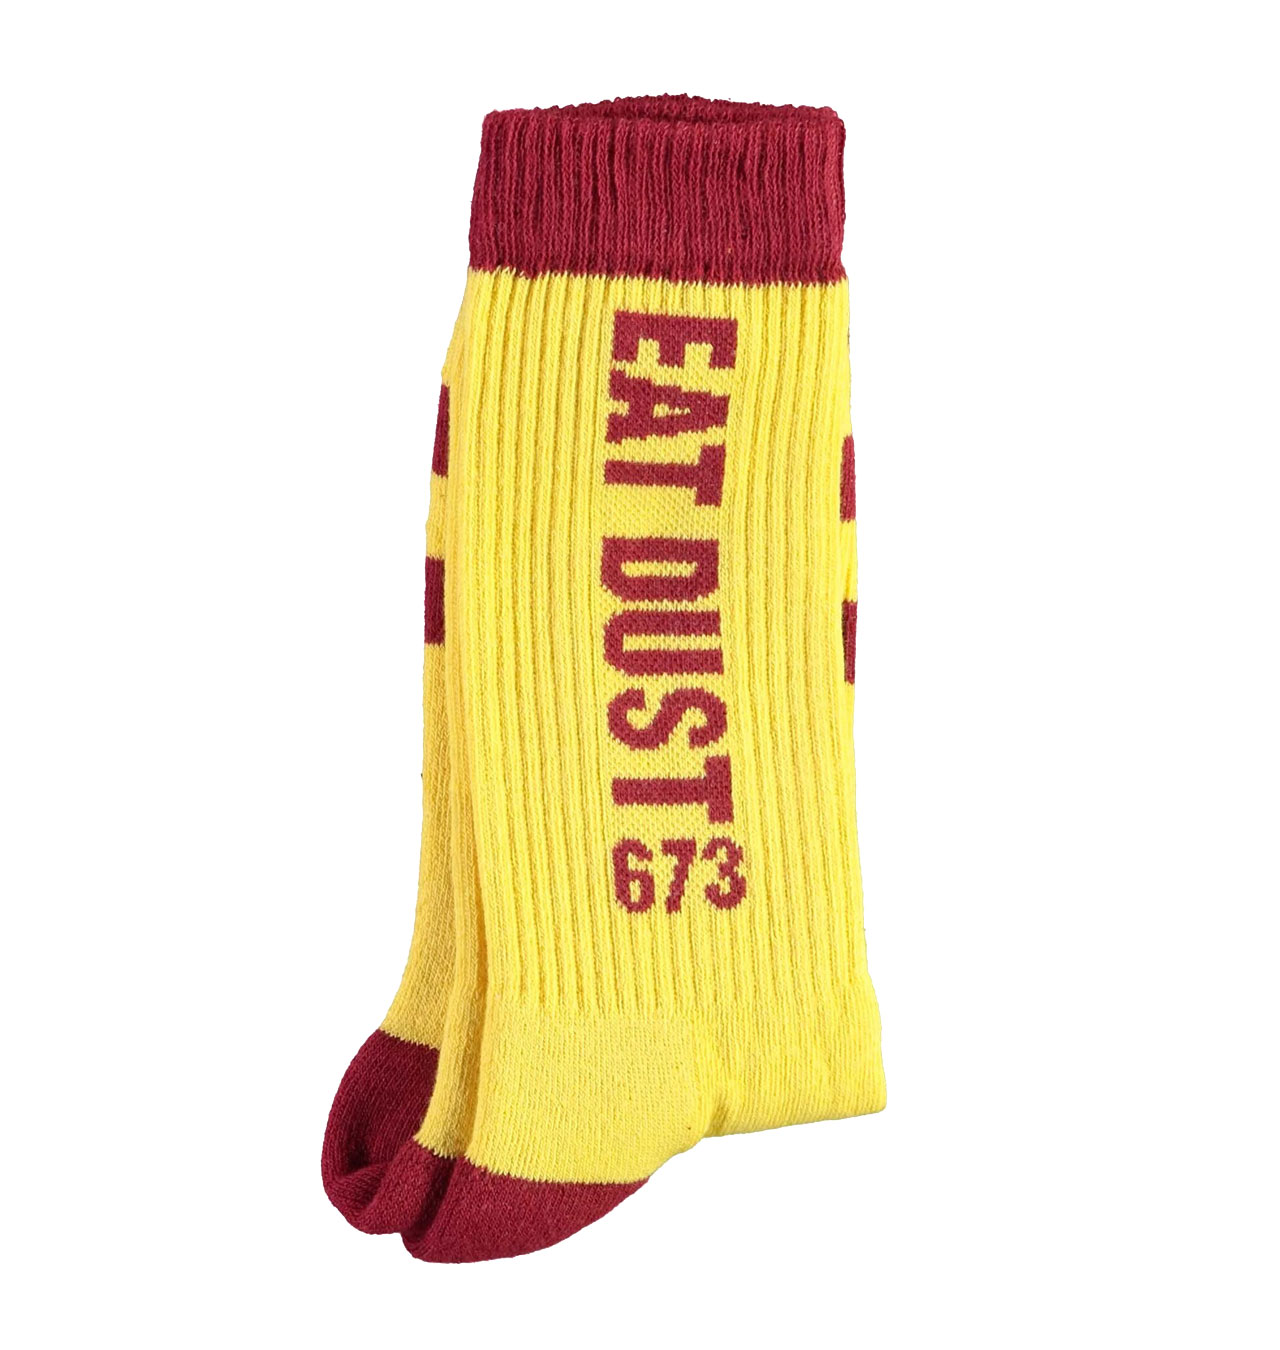 Eat Dust - ED673 Socks - Yellow